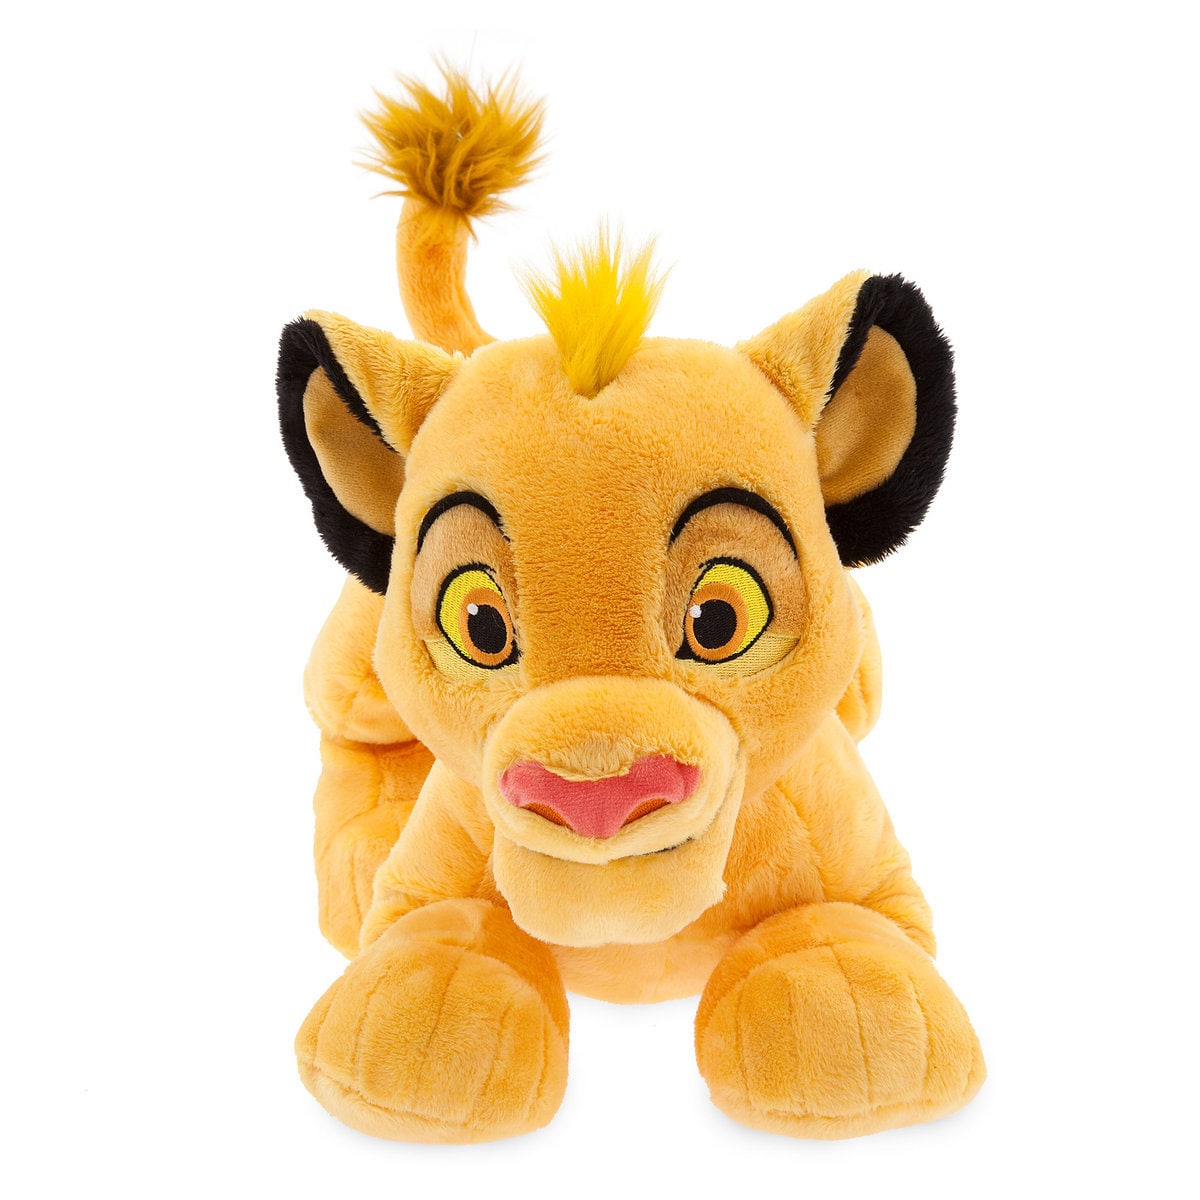 Disney Store Simba The Lion King Medium Plush New with Tags